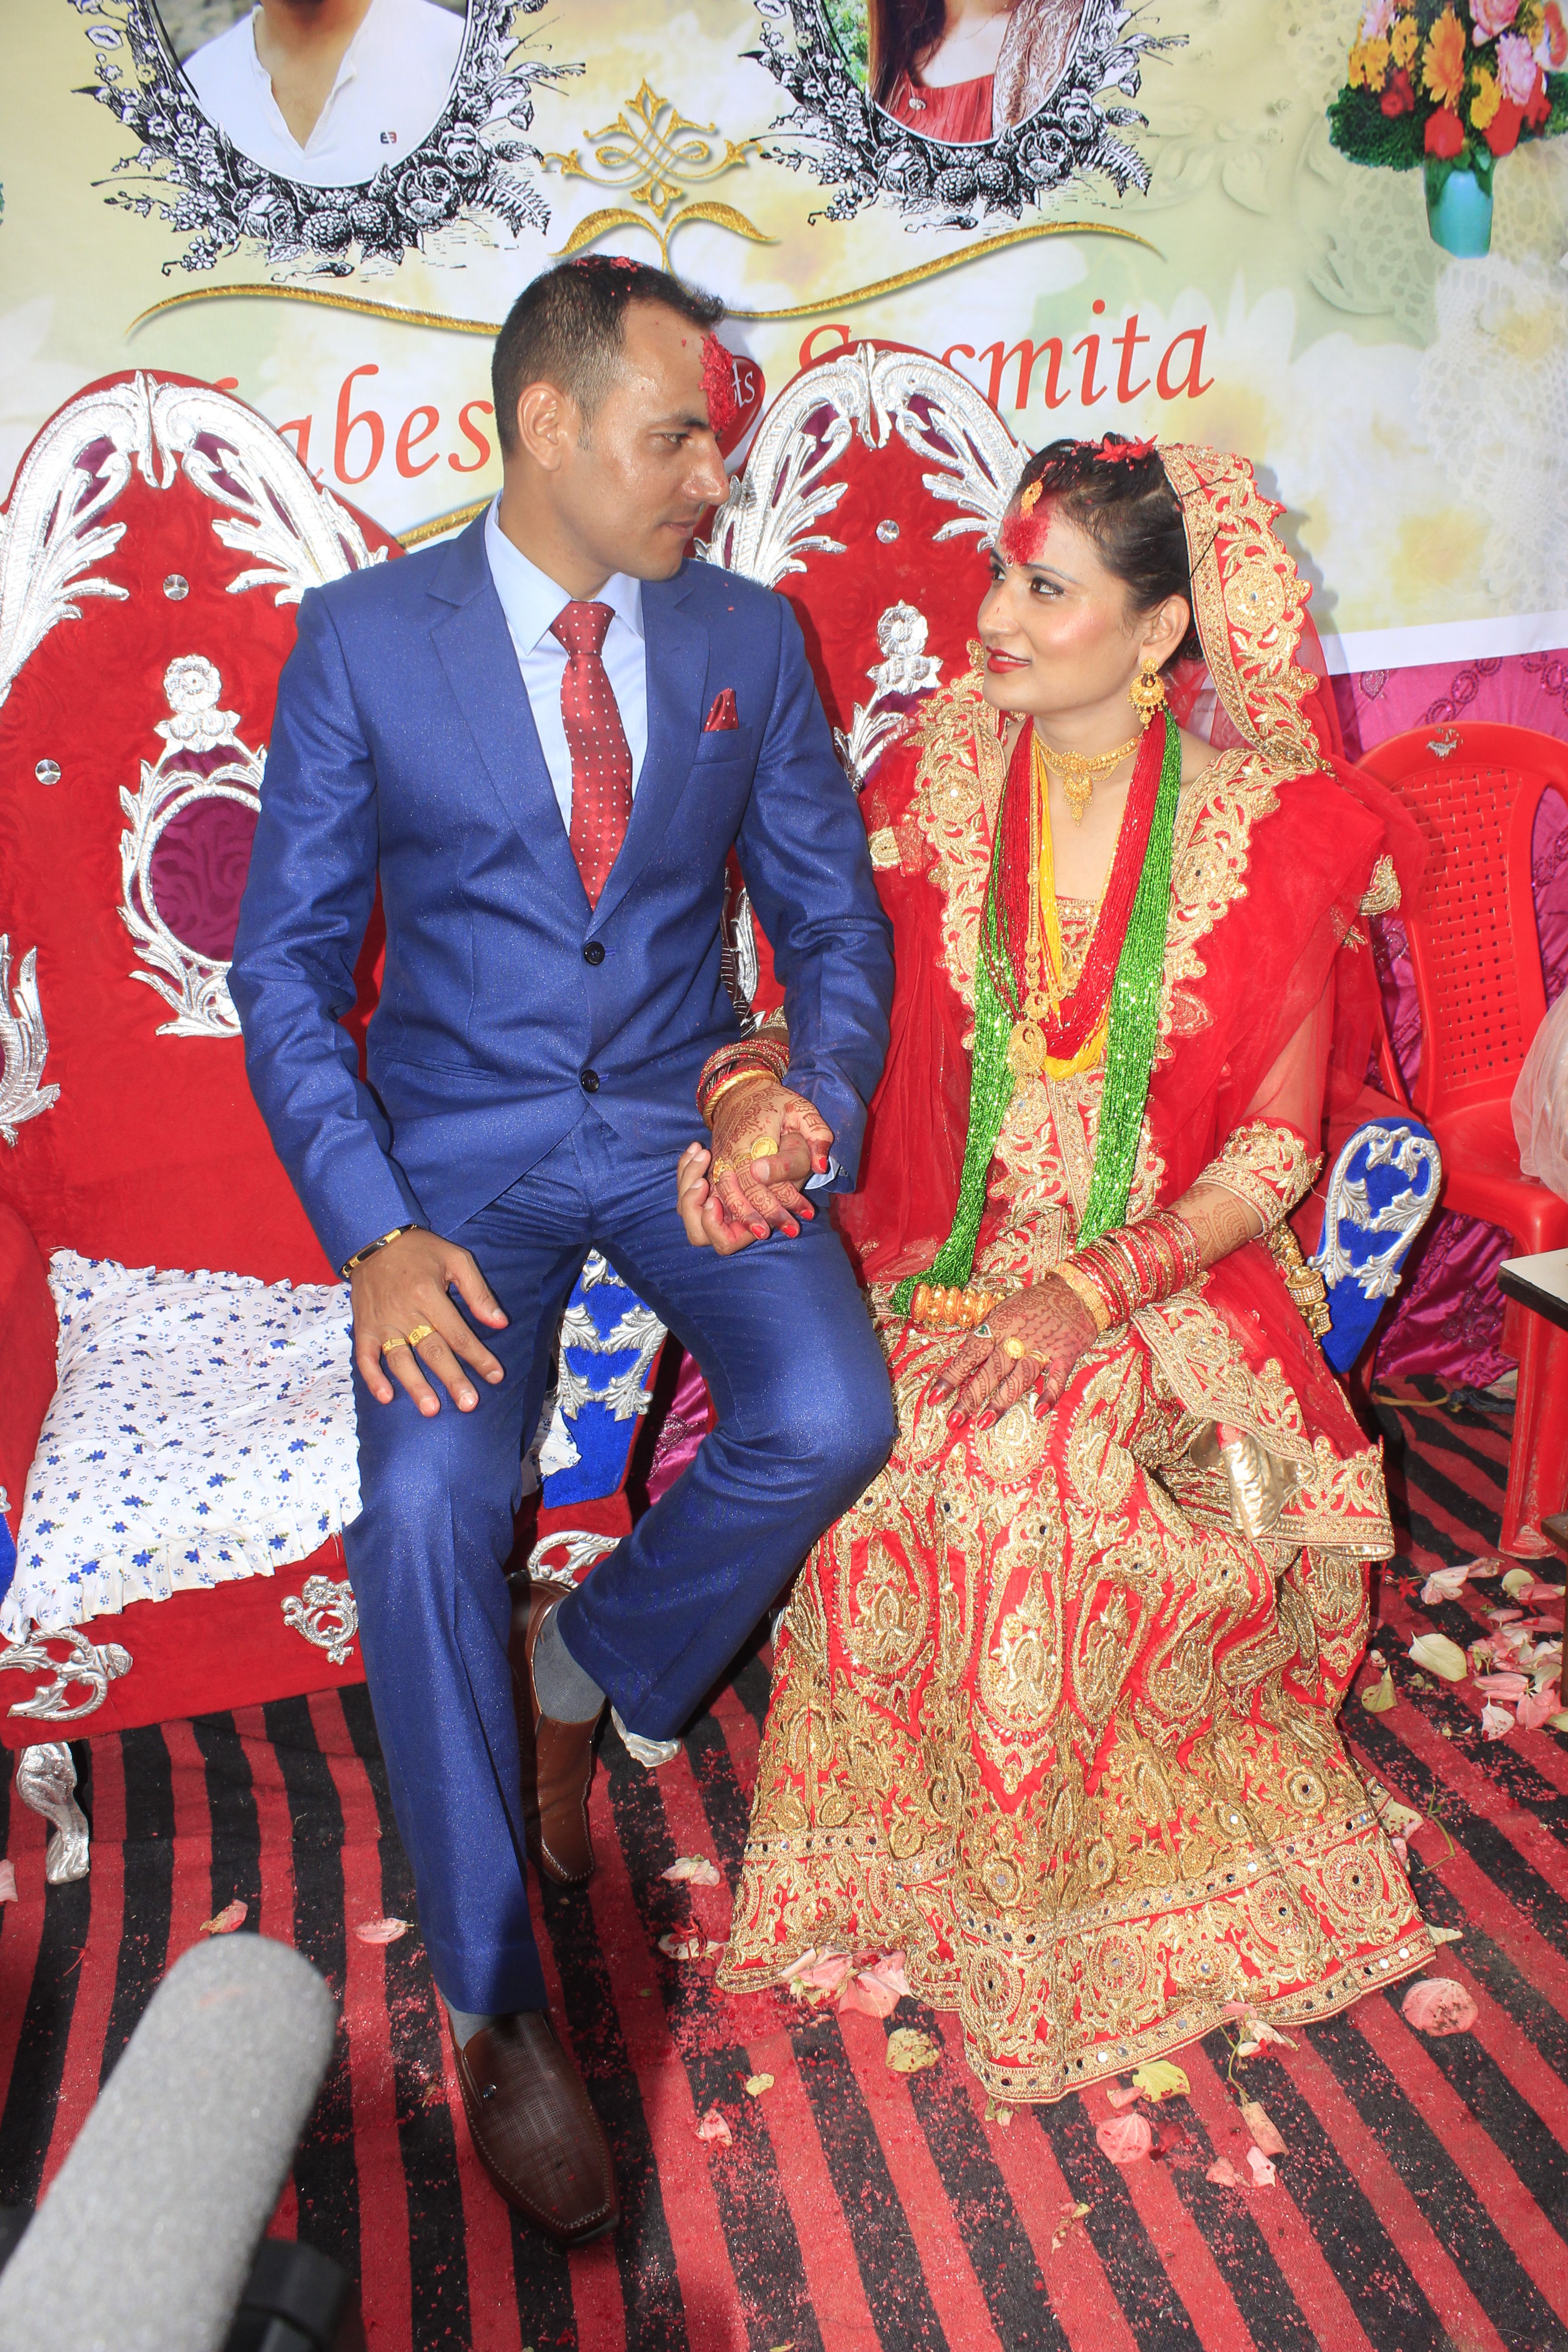 Free of bride pic, indian wedding, nepali wedding